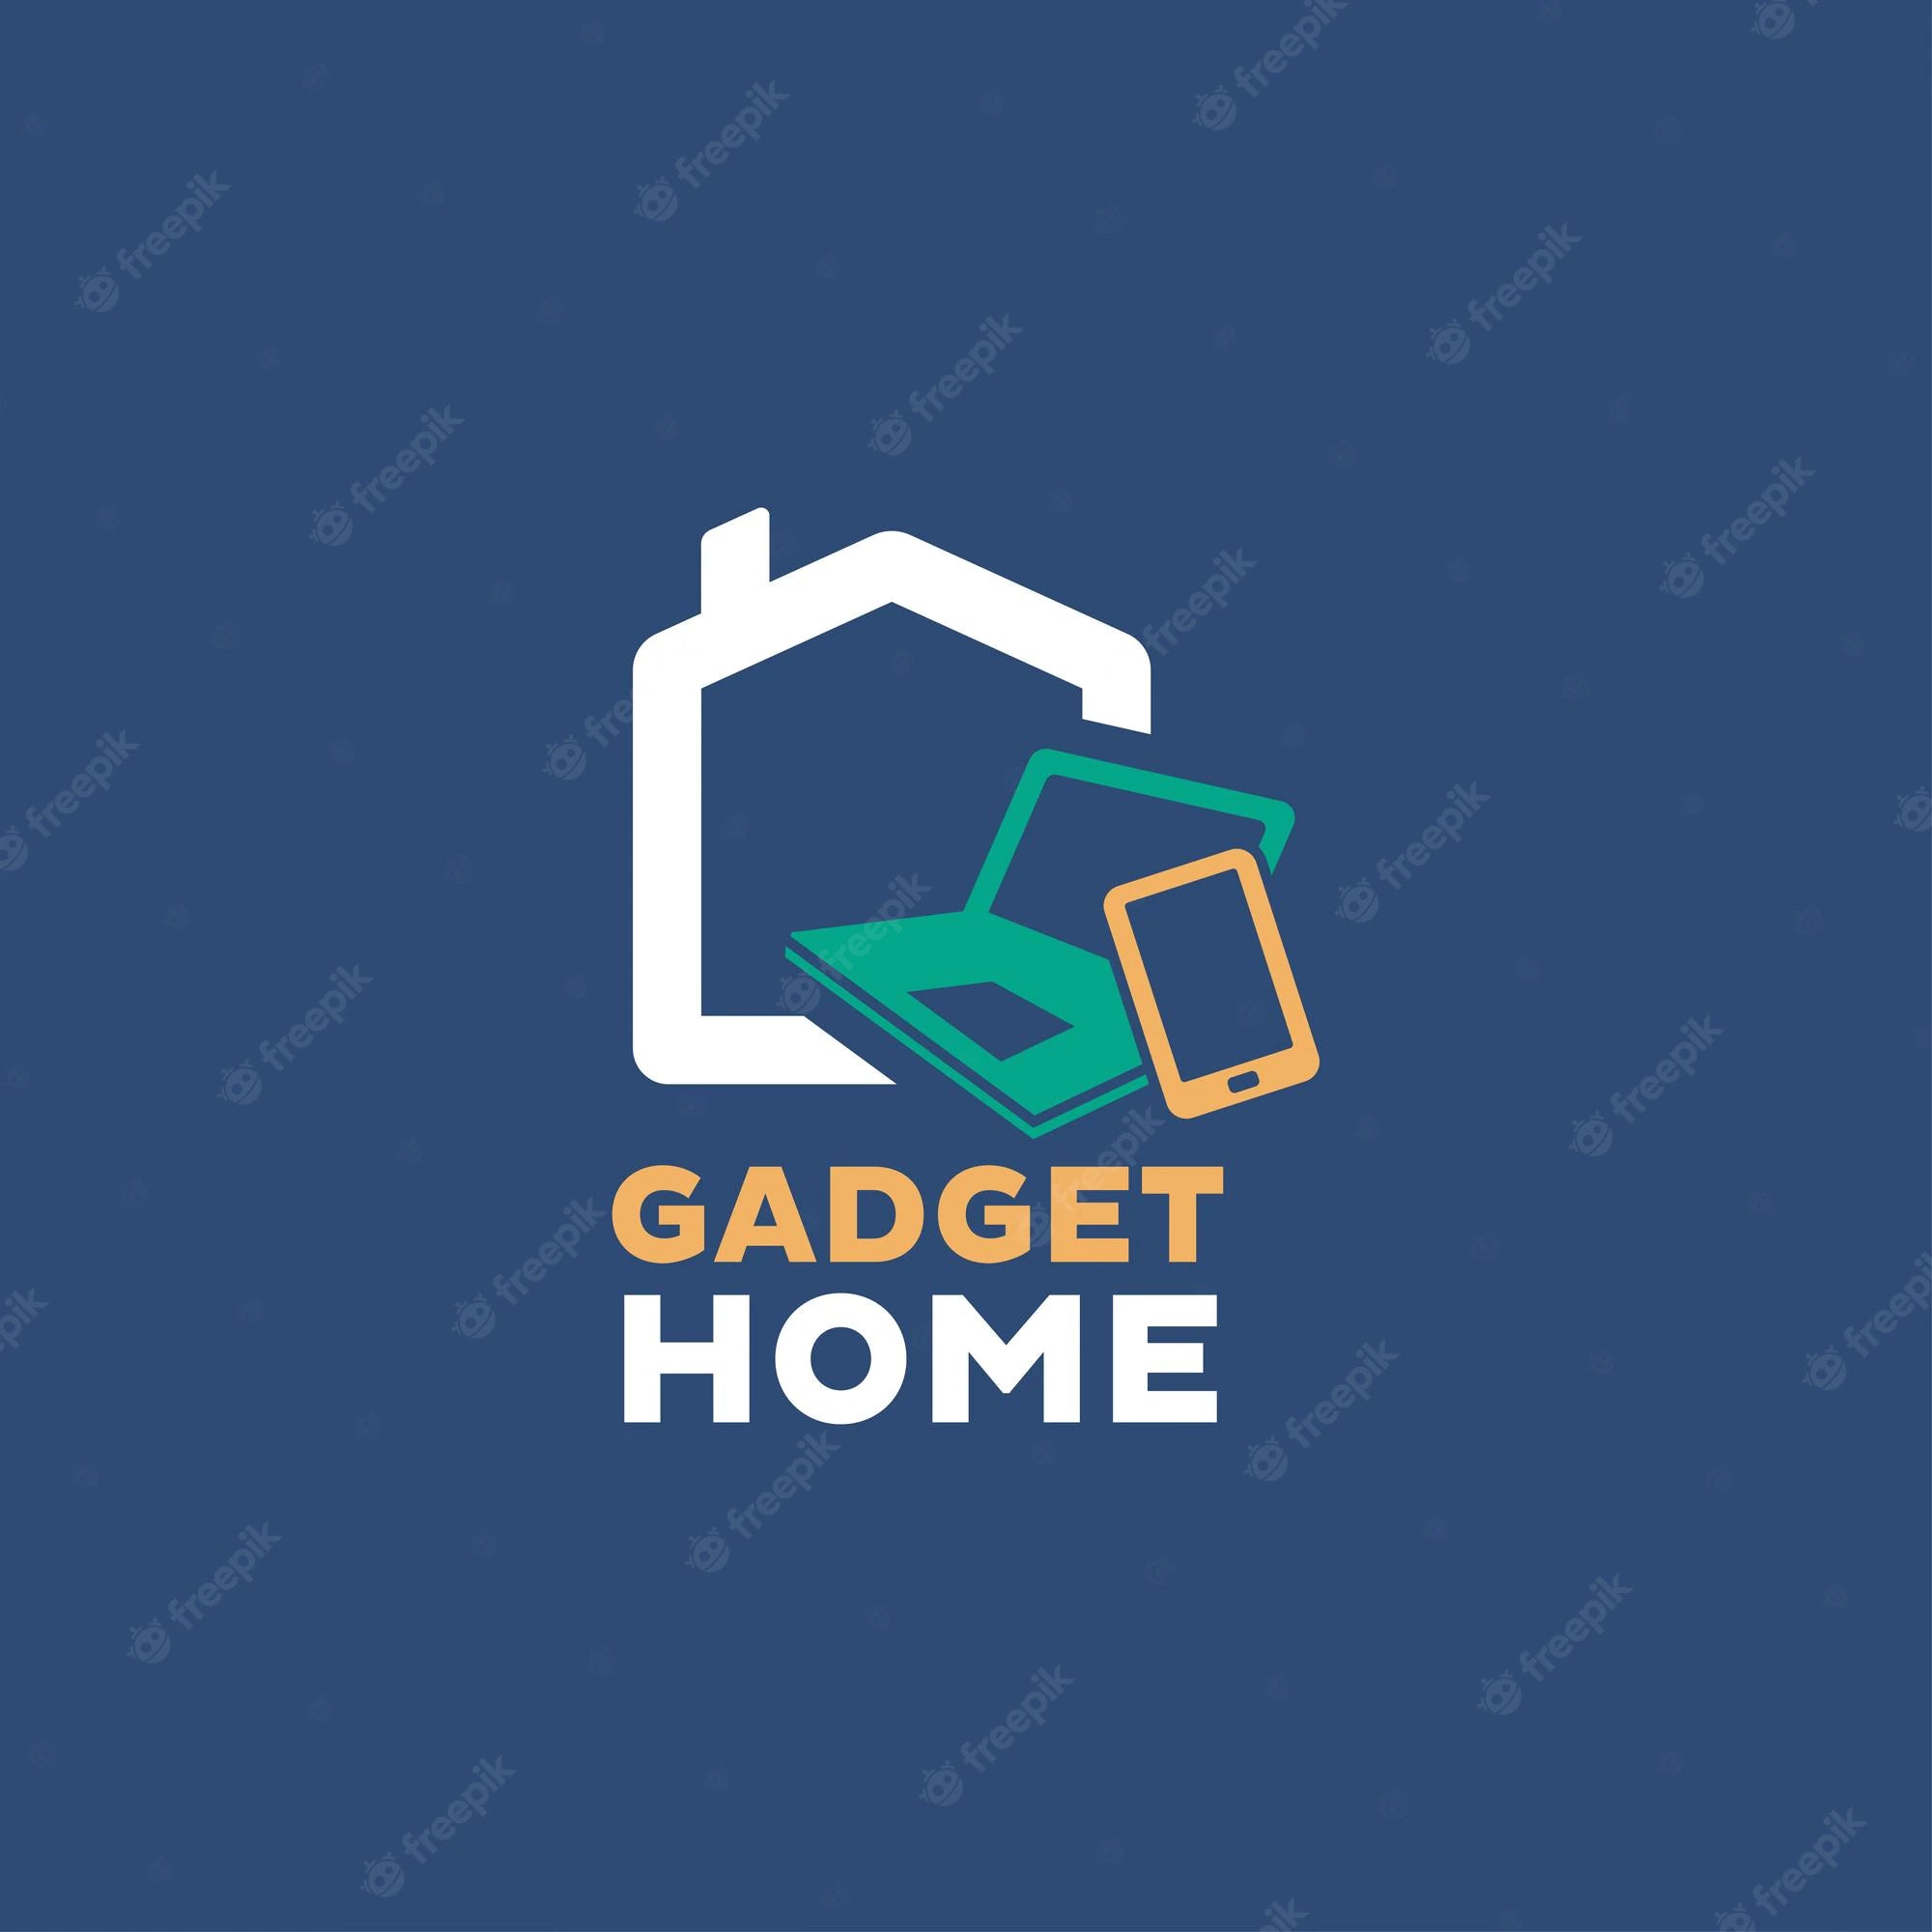 Gadget Home